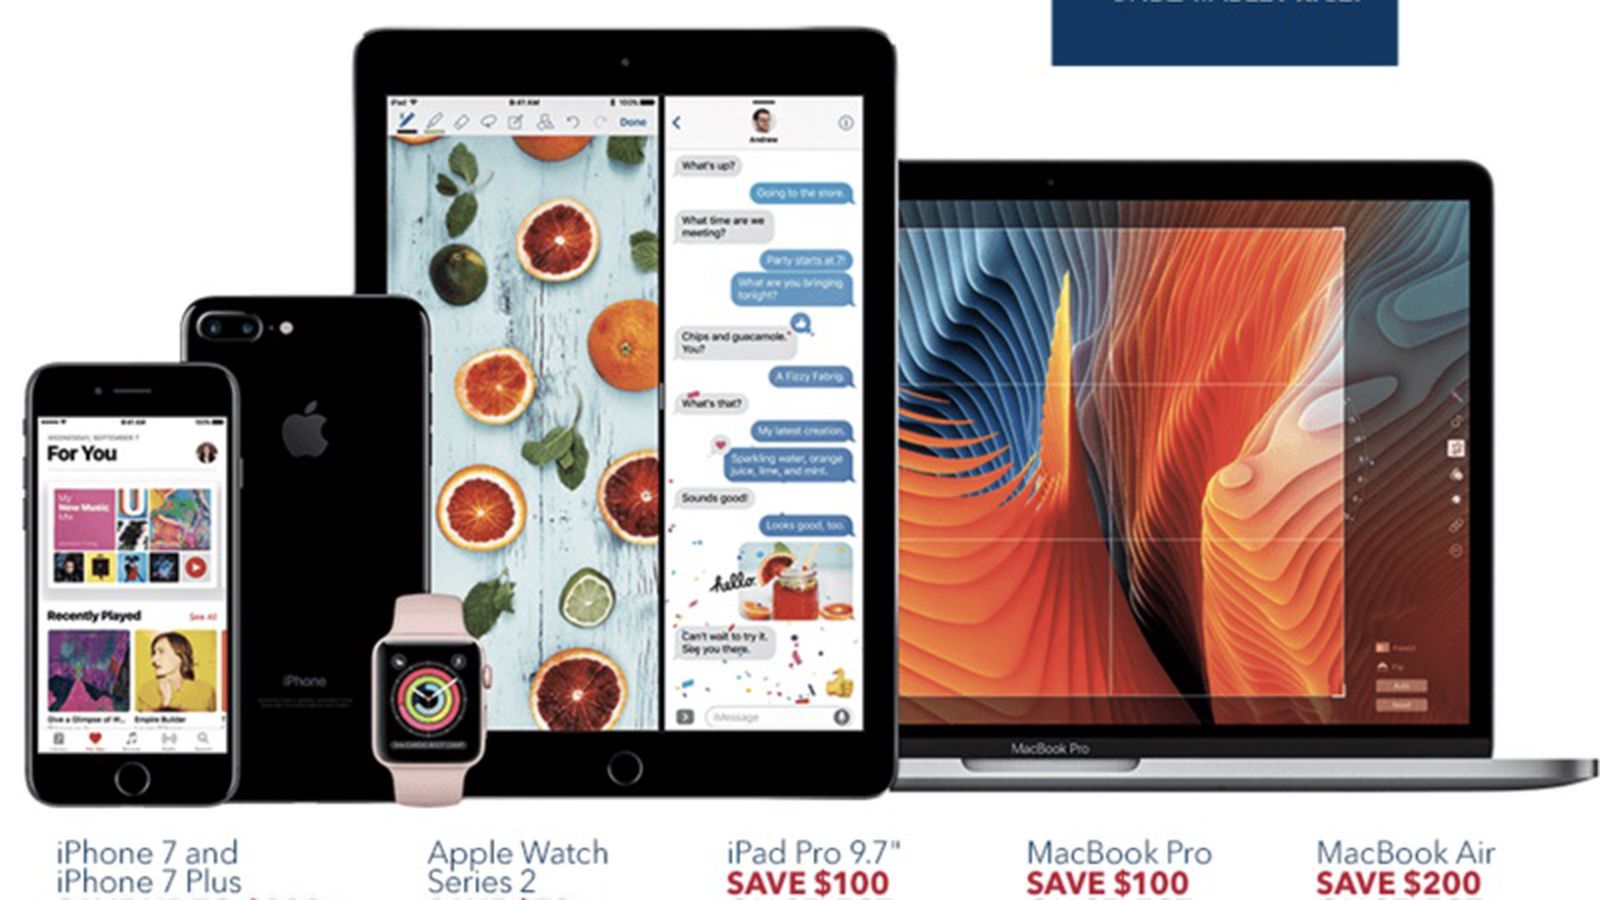 Best Buy Discounts Apple Watch Series 2 By 70 Drops Ipad Pro Price By 100 Macrumors